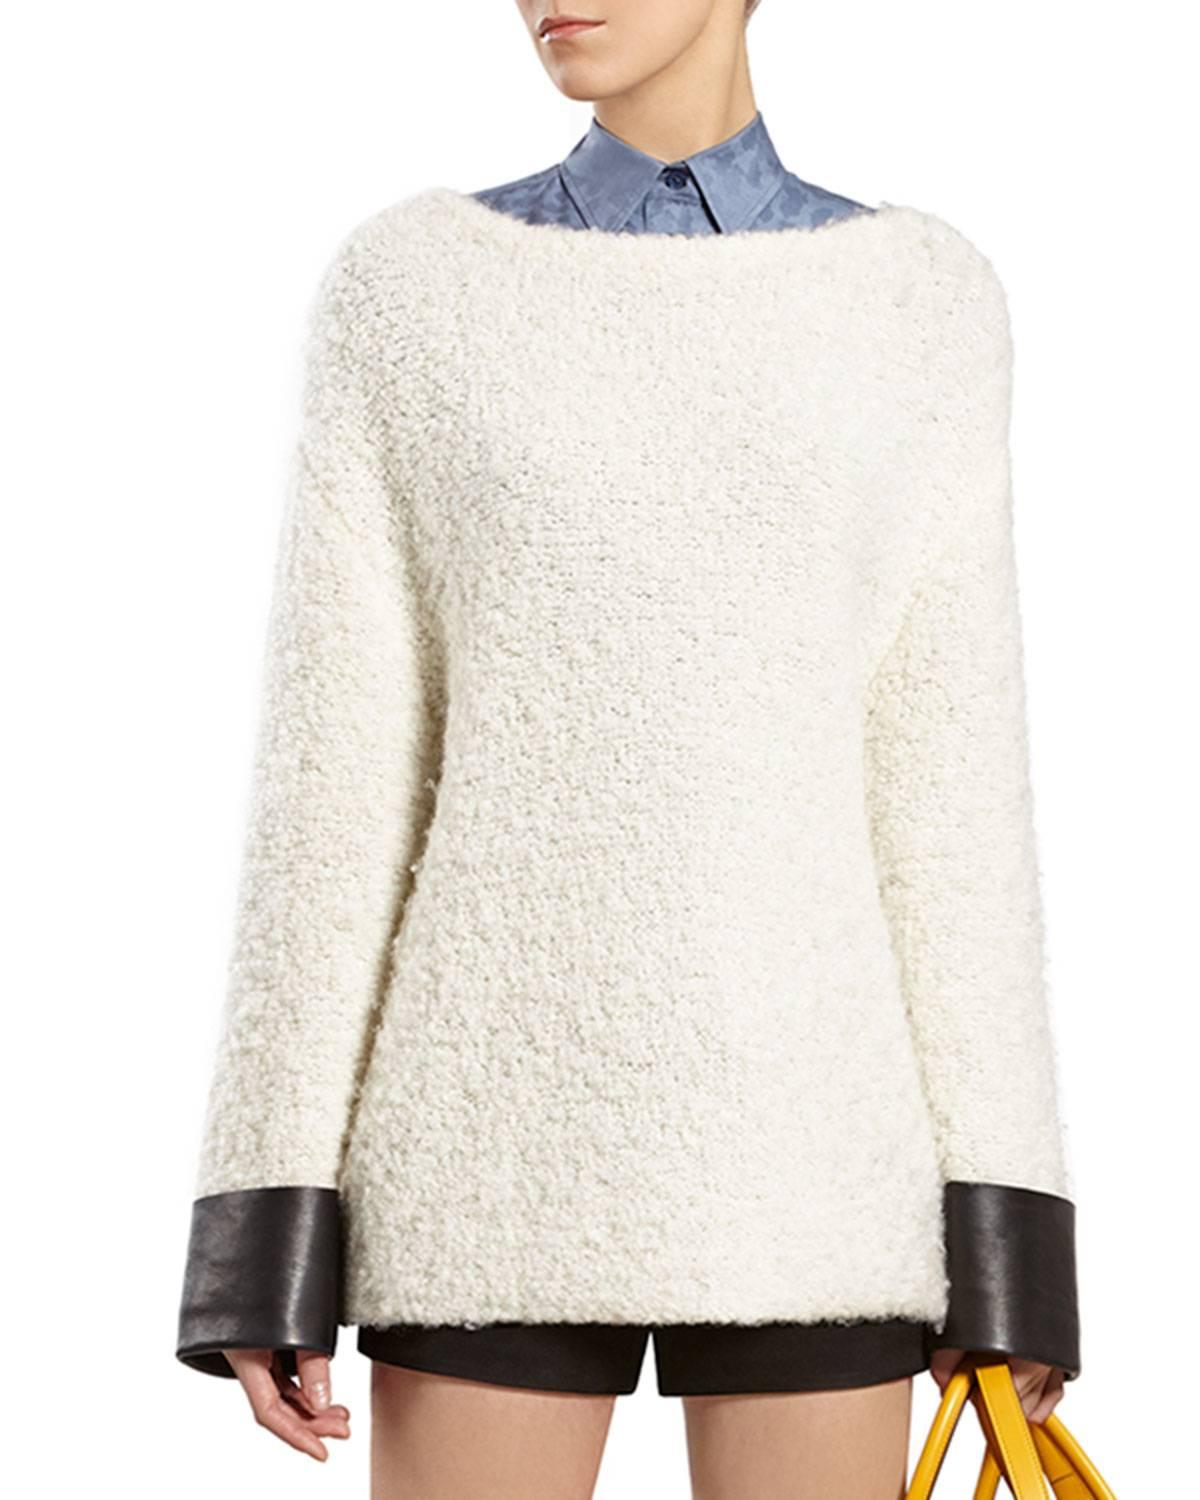 Women's New $1630 GUCCI Boucle Wool Alpaca Cream Knitted Sweater w / Leather Cuffs M (L)